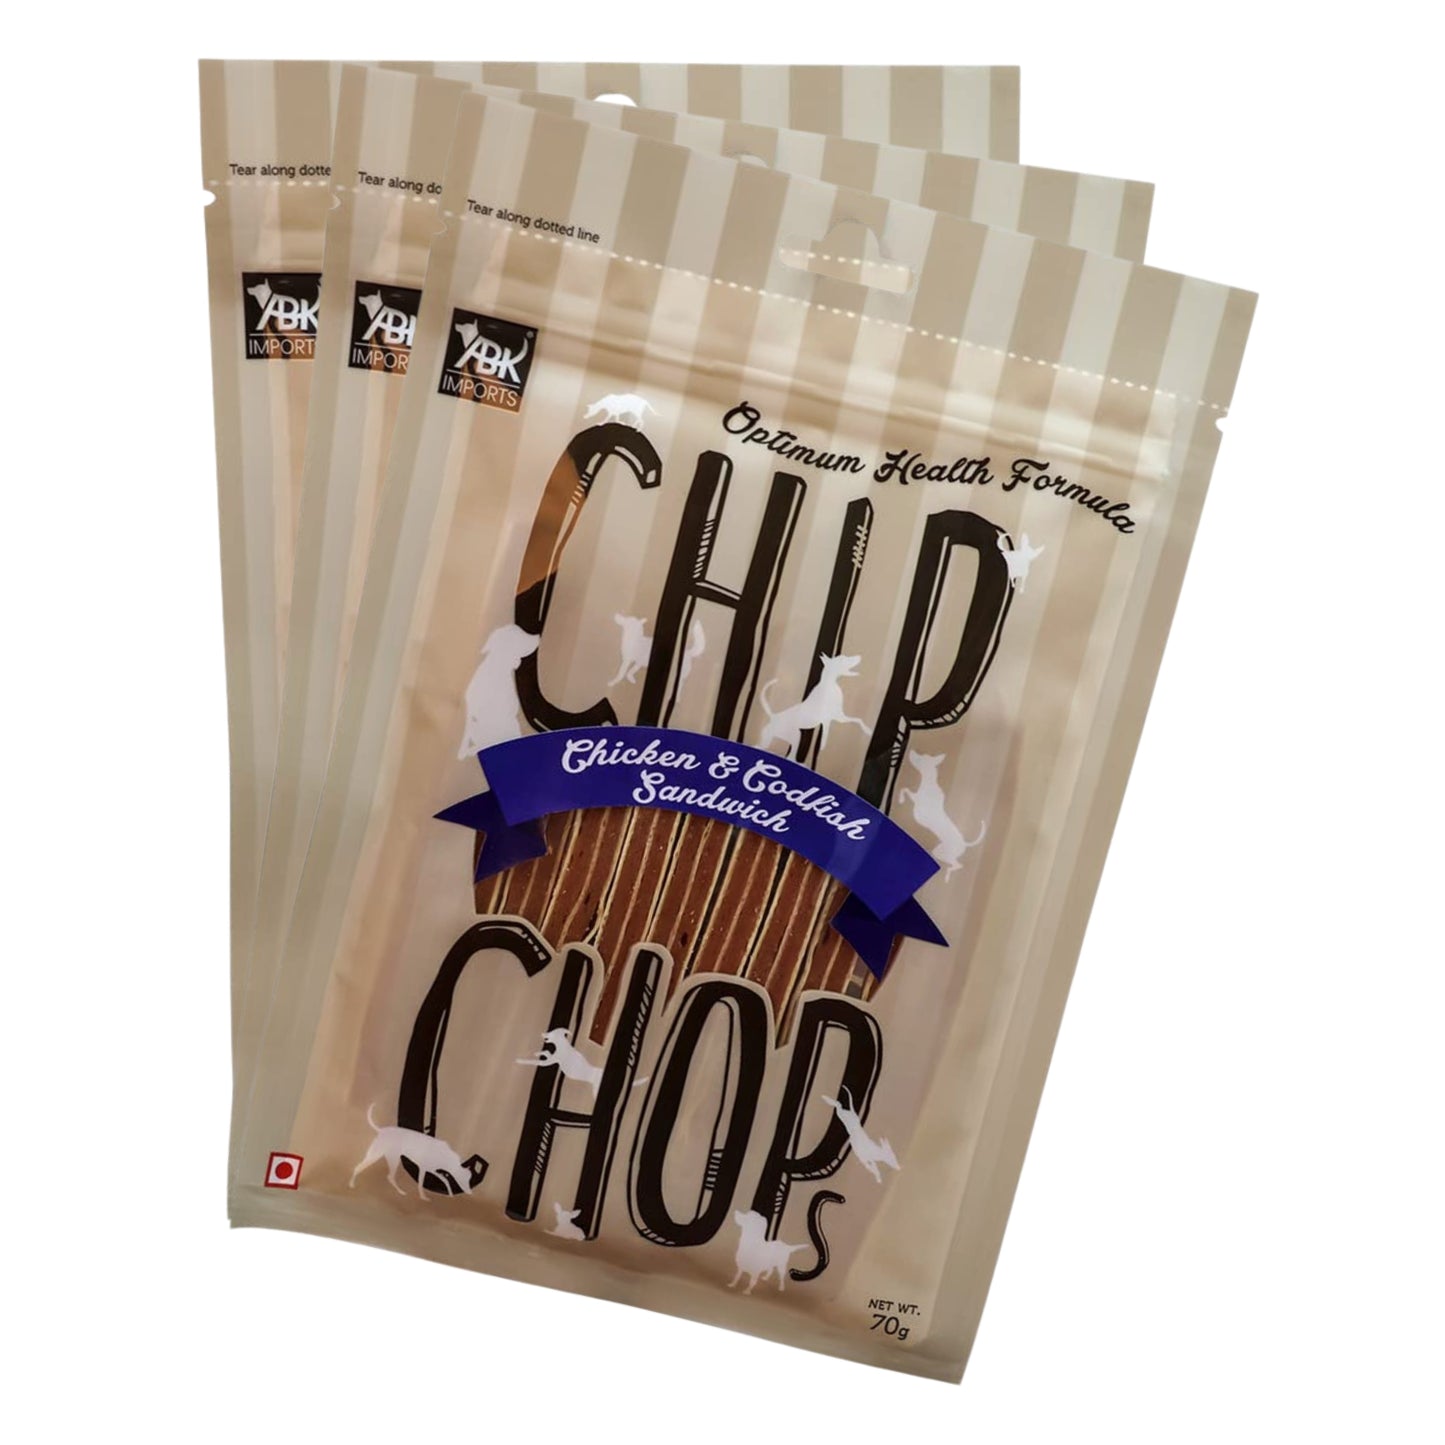 Chip Chops Dog Treats, 70gm (Chicken & Codfish Sandwich, Pack of 3)